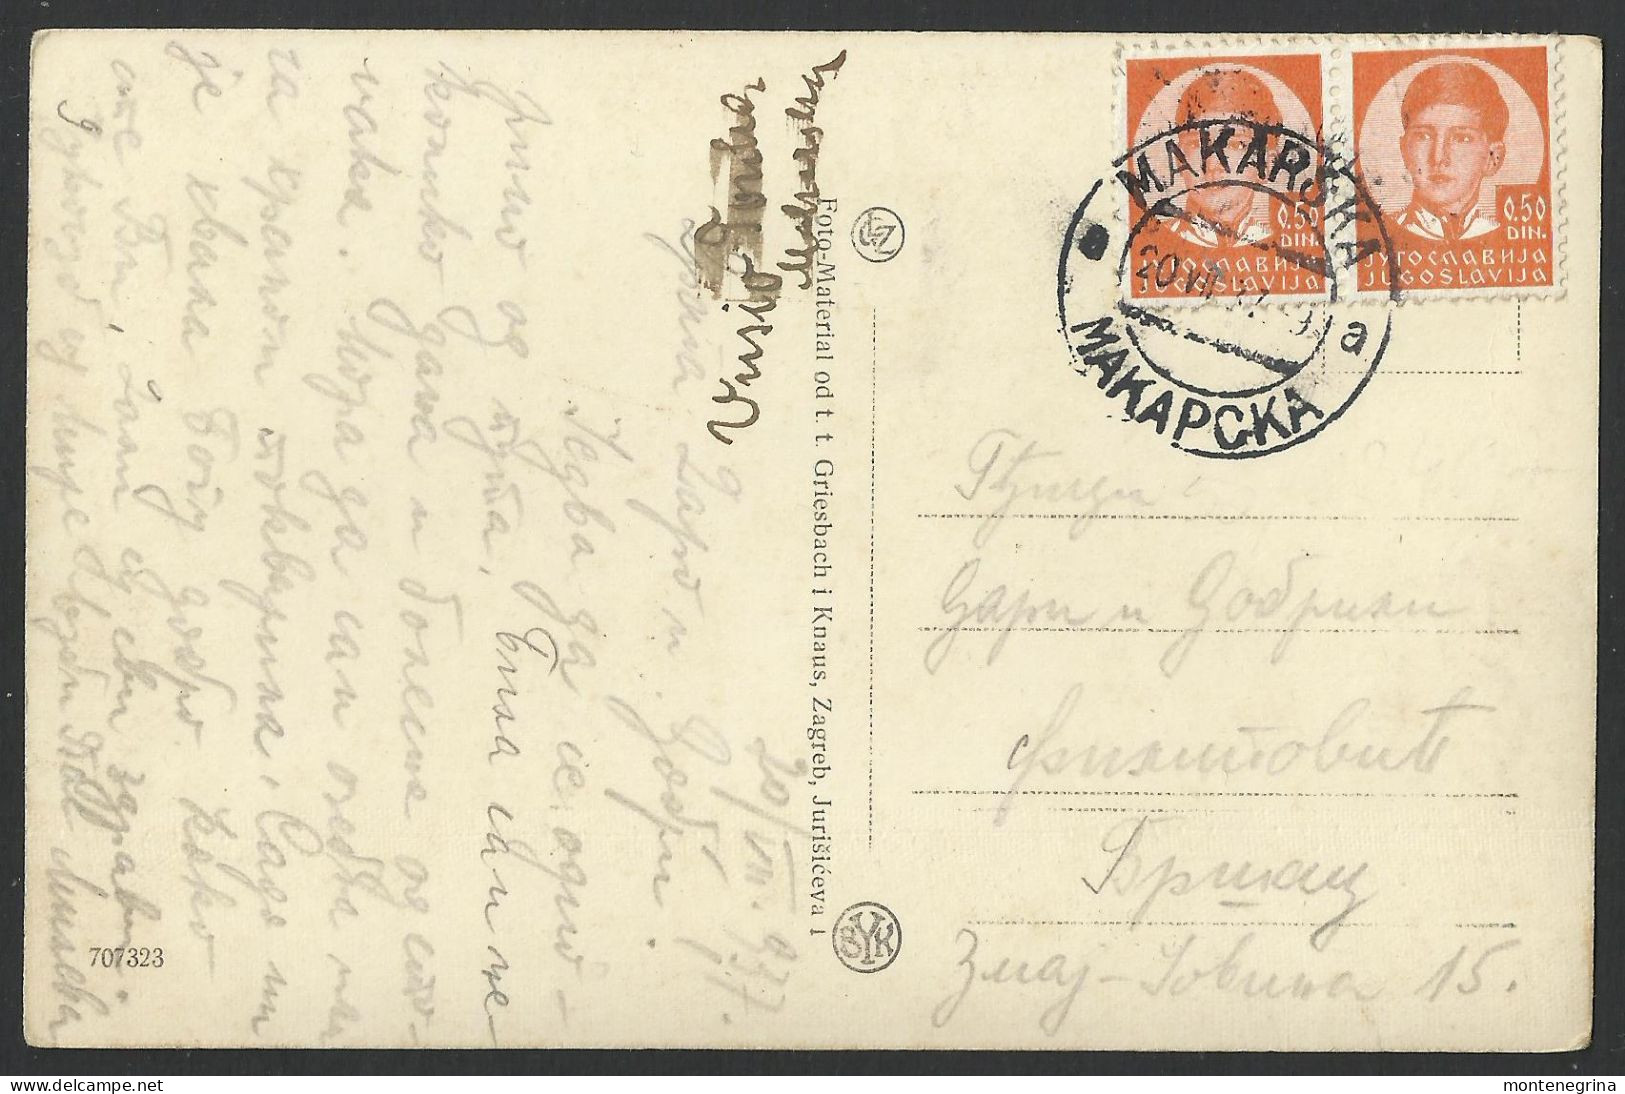 CROATIA MAKARSKA - Panorama - Old 1937 Postcard (see Sales Conditions) 010161 - Croacia